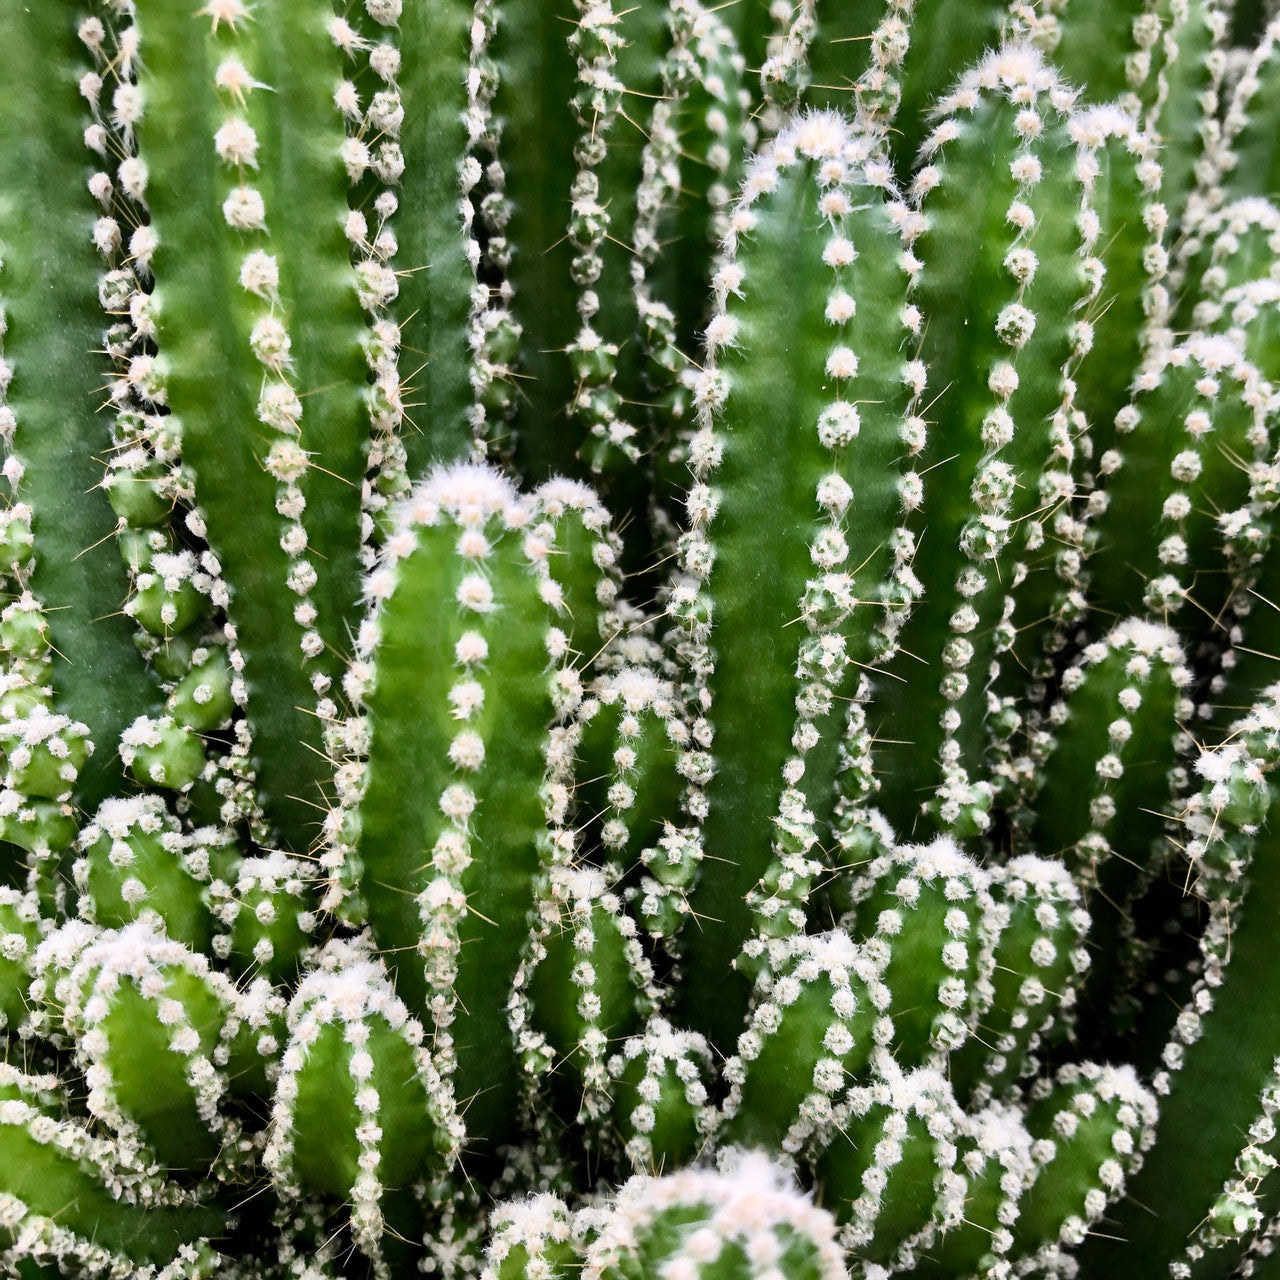 a fairy tail cactus, acanthocereus tetragonus close up to show detail of large bowl